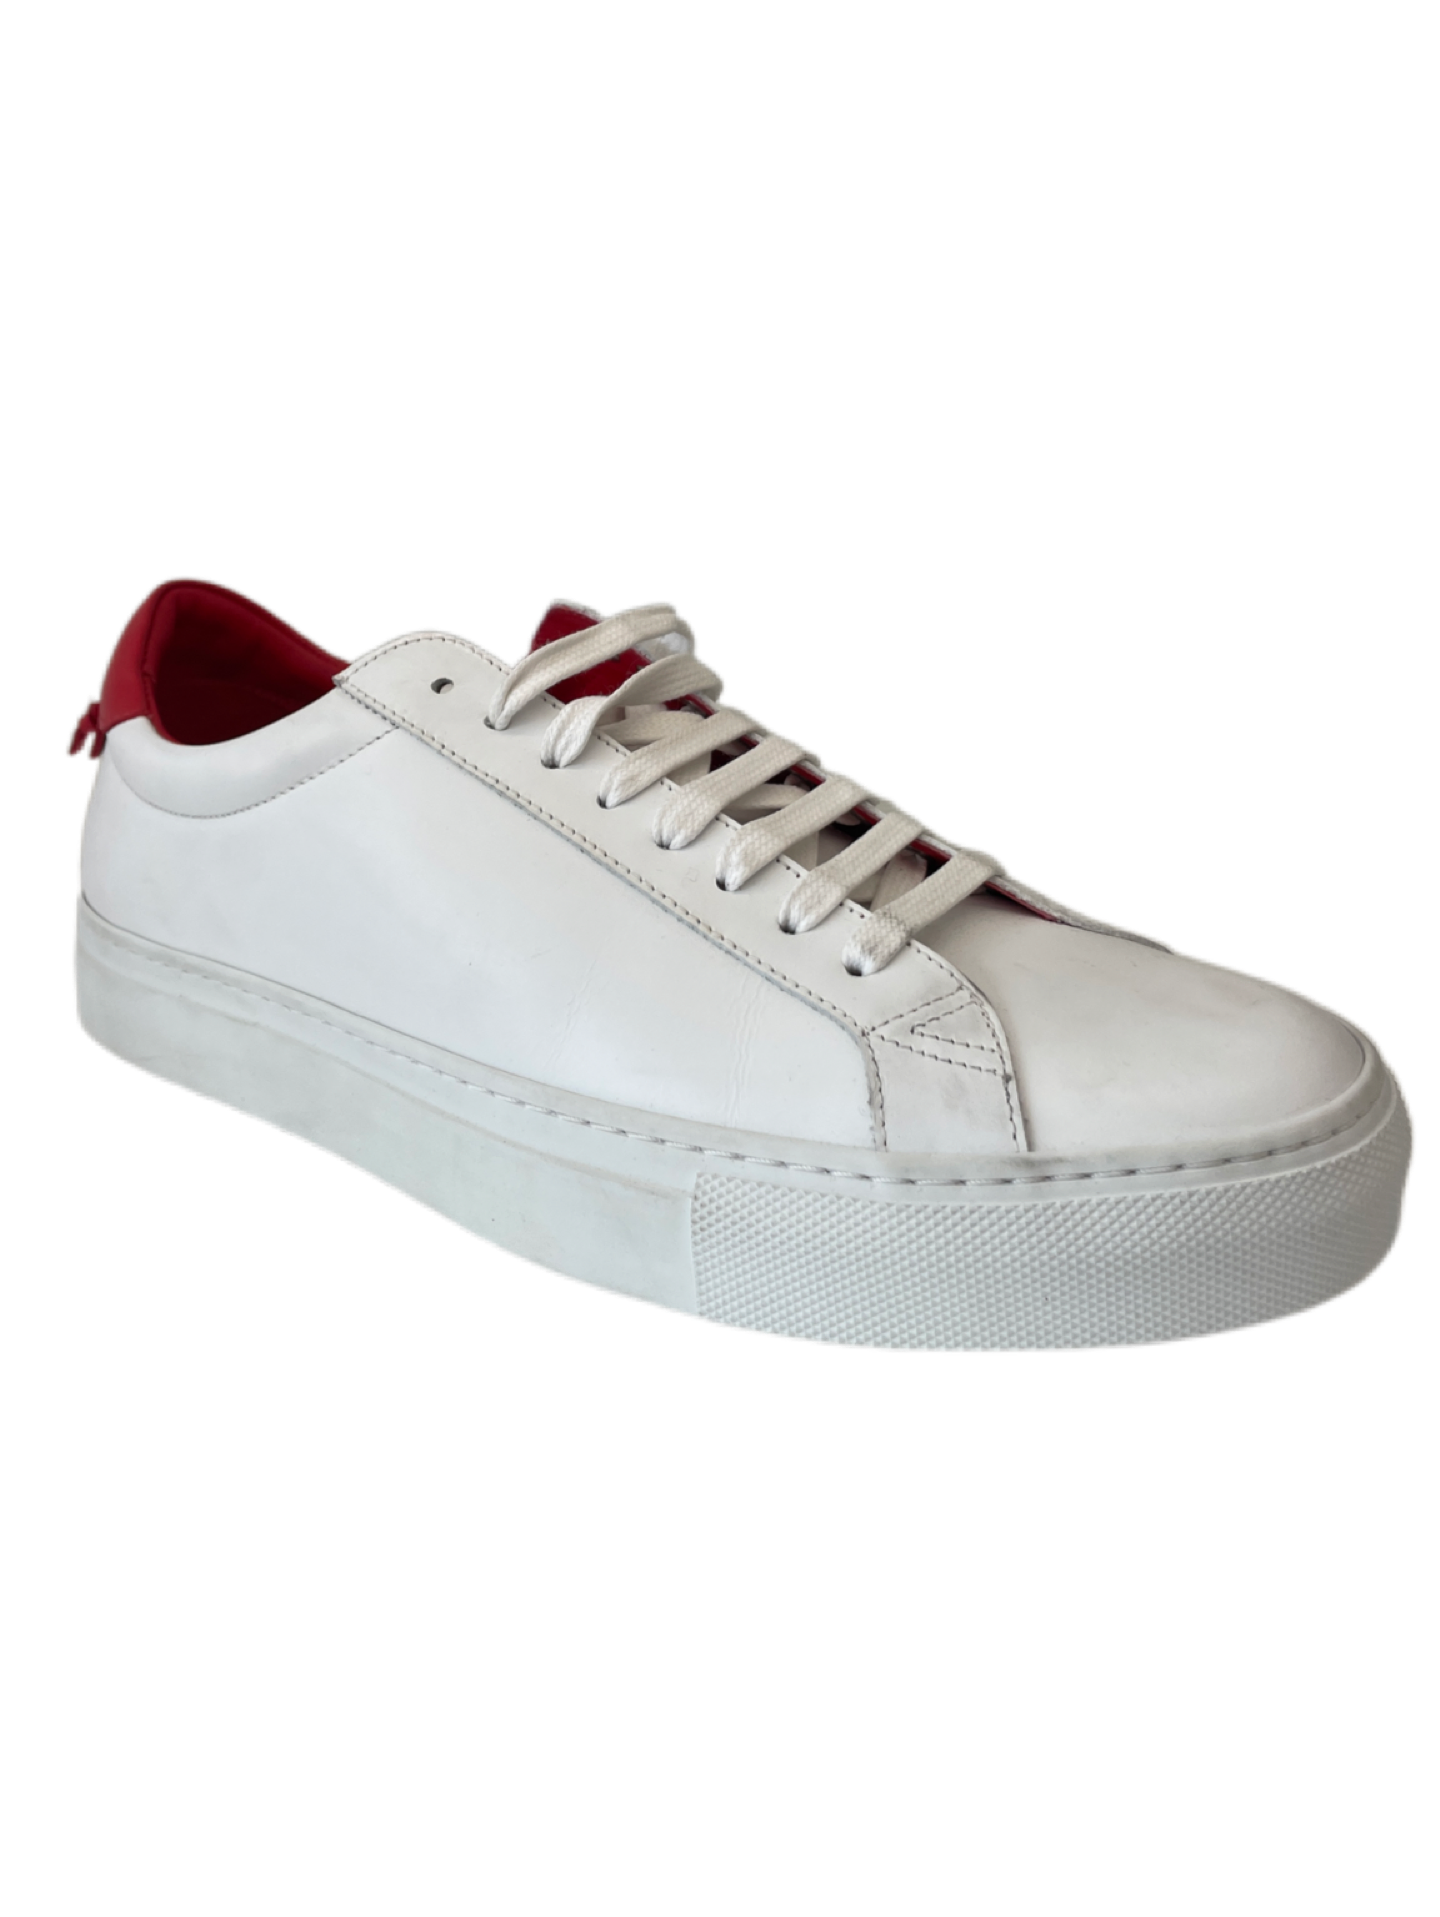 Valentino White Sneakers. Size: 41